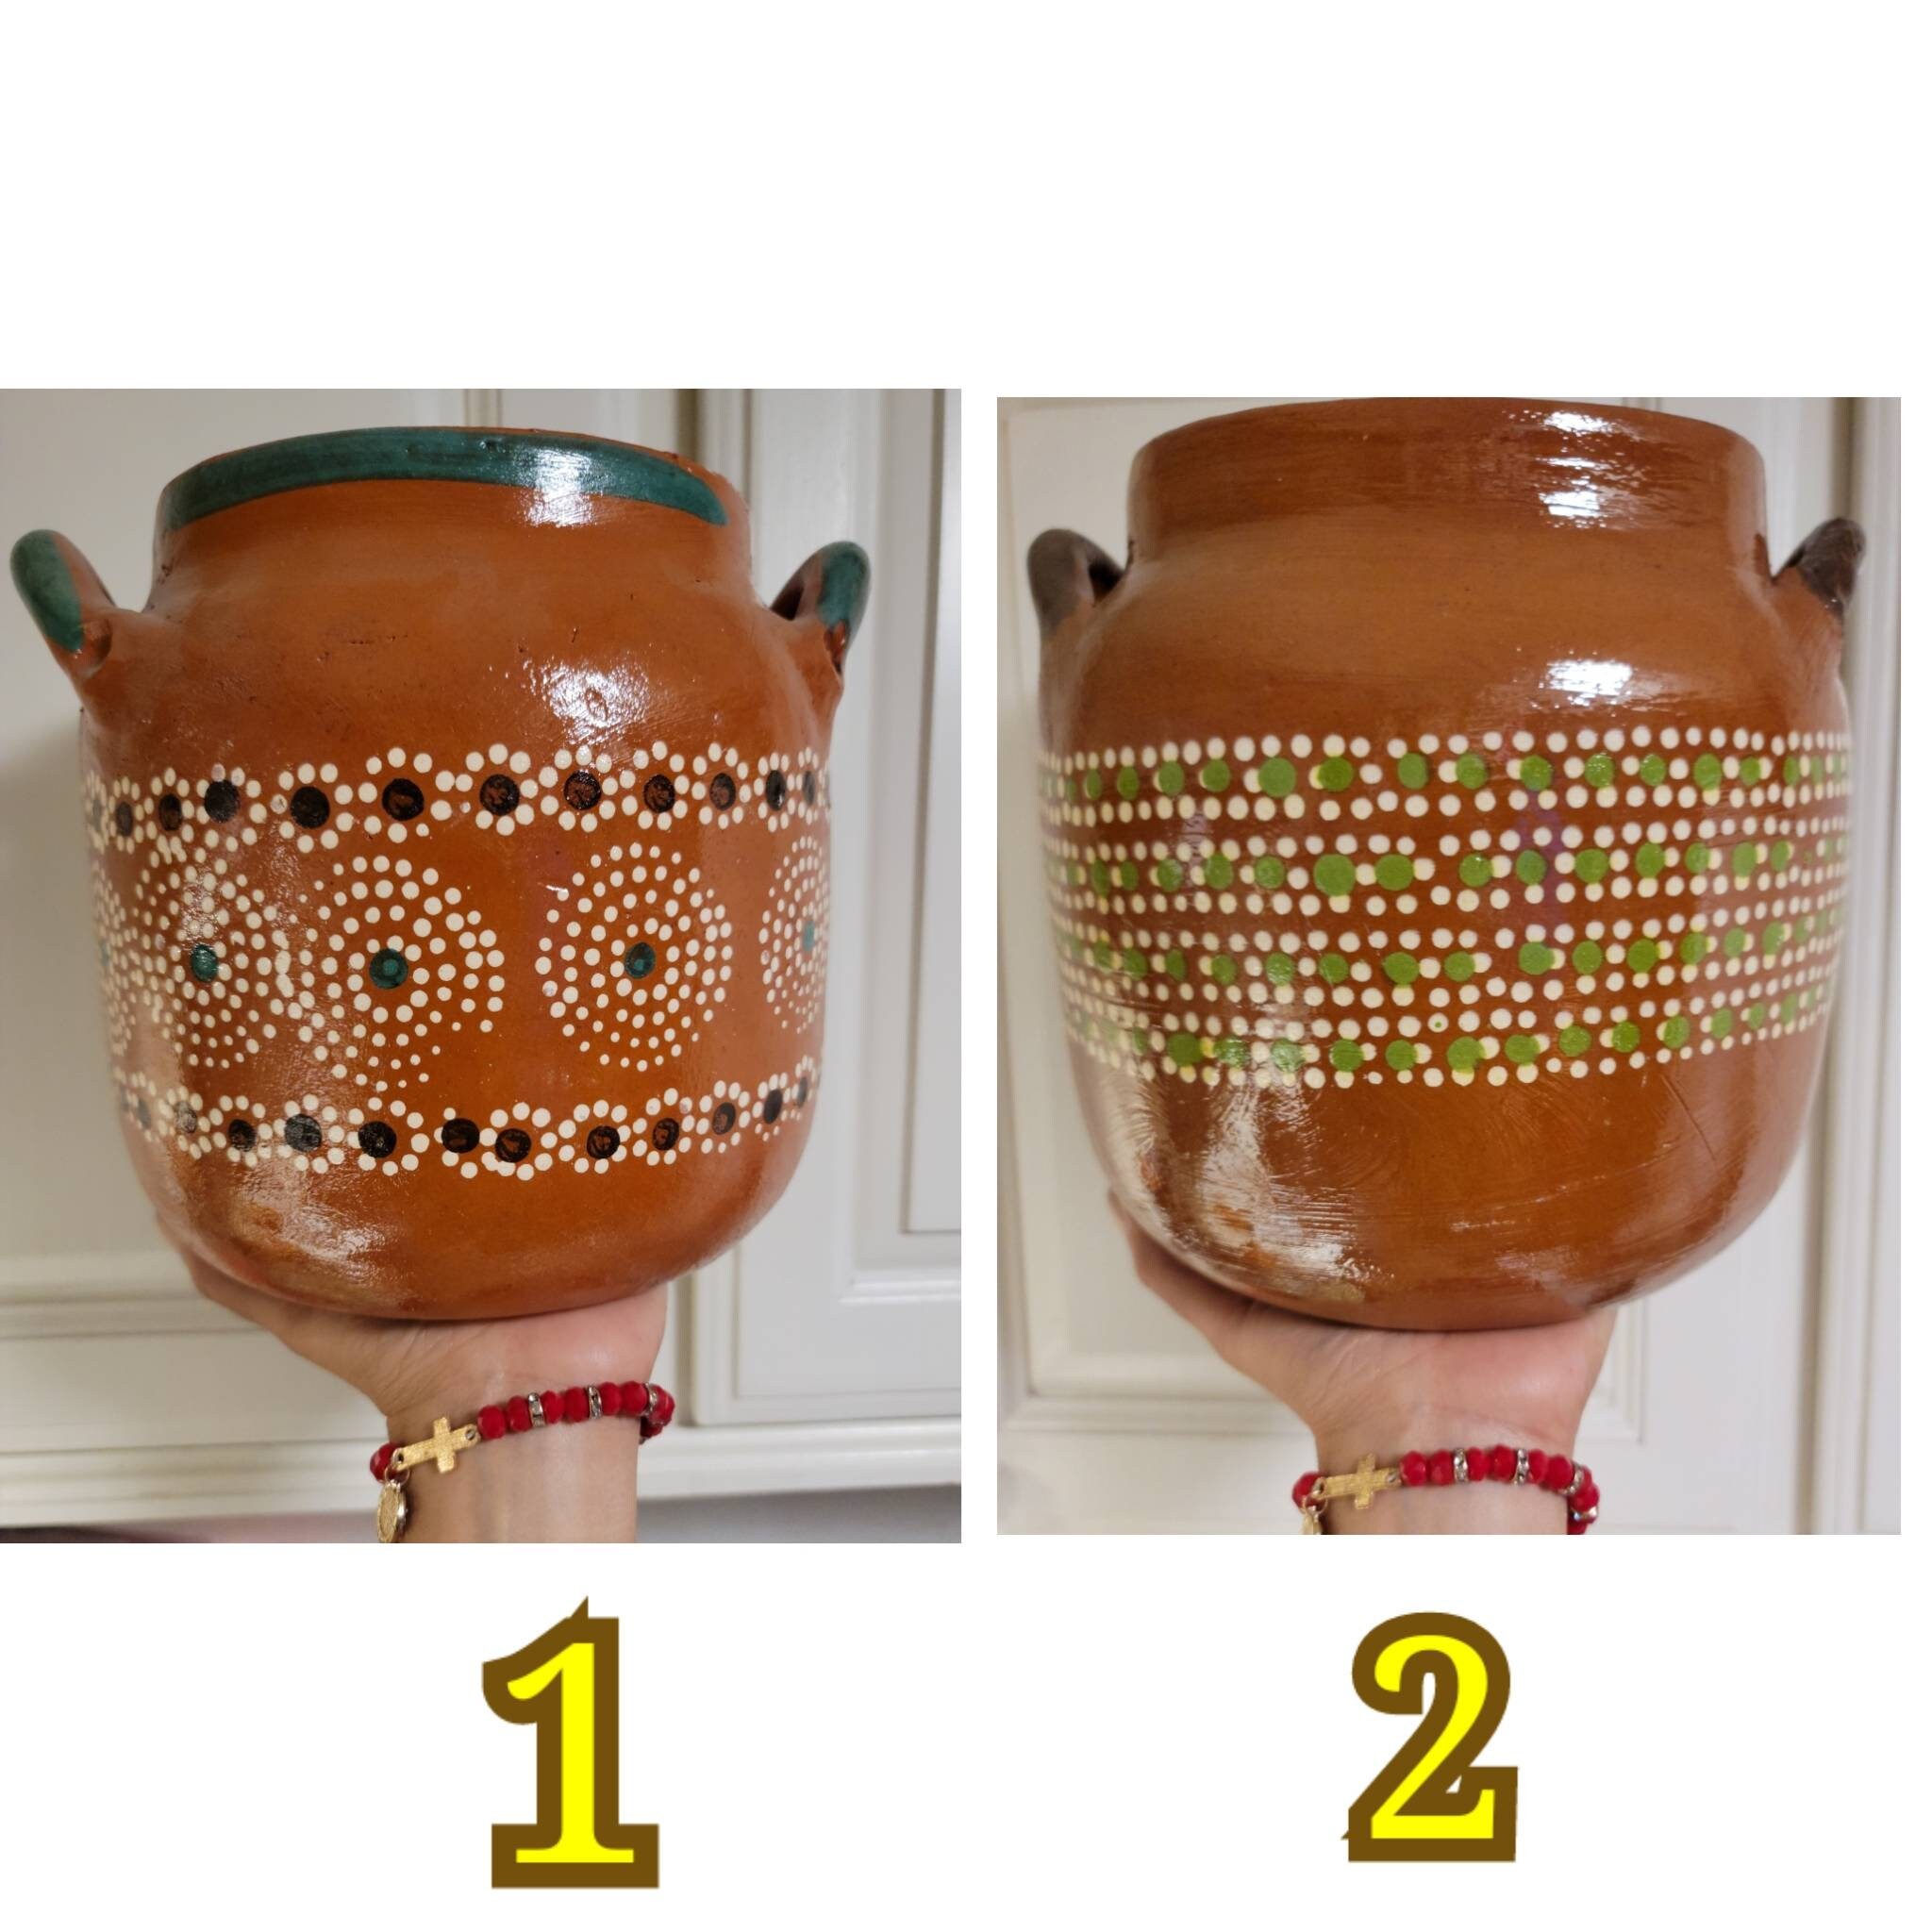 Jarra de barro con 6 vasos - Household Items - McAllen, Texas, Facebook  Marketplace